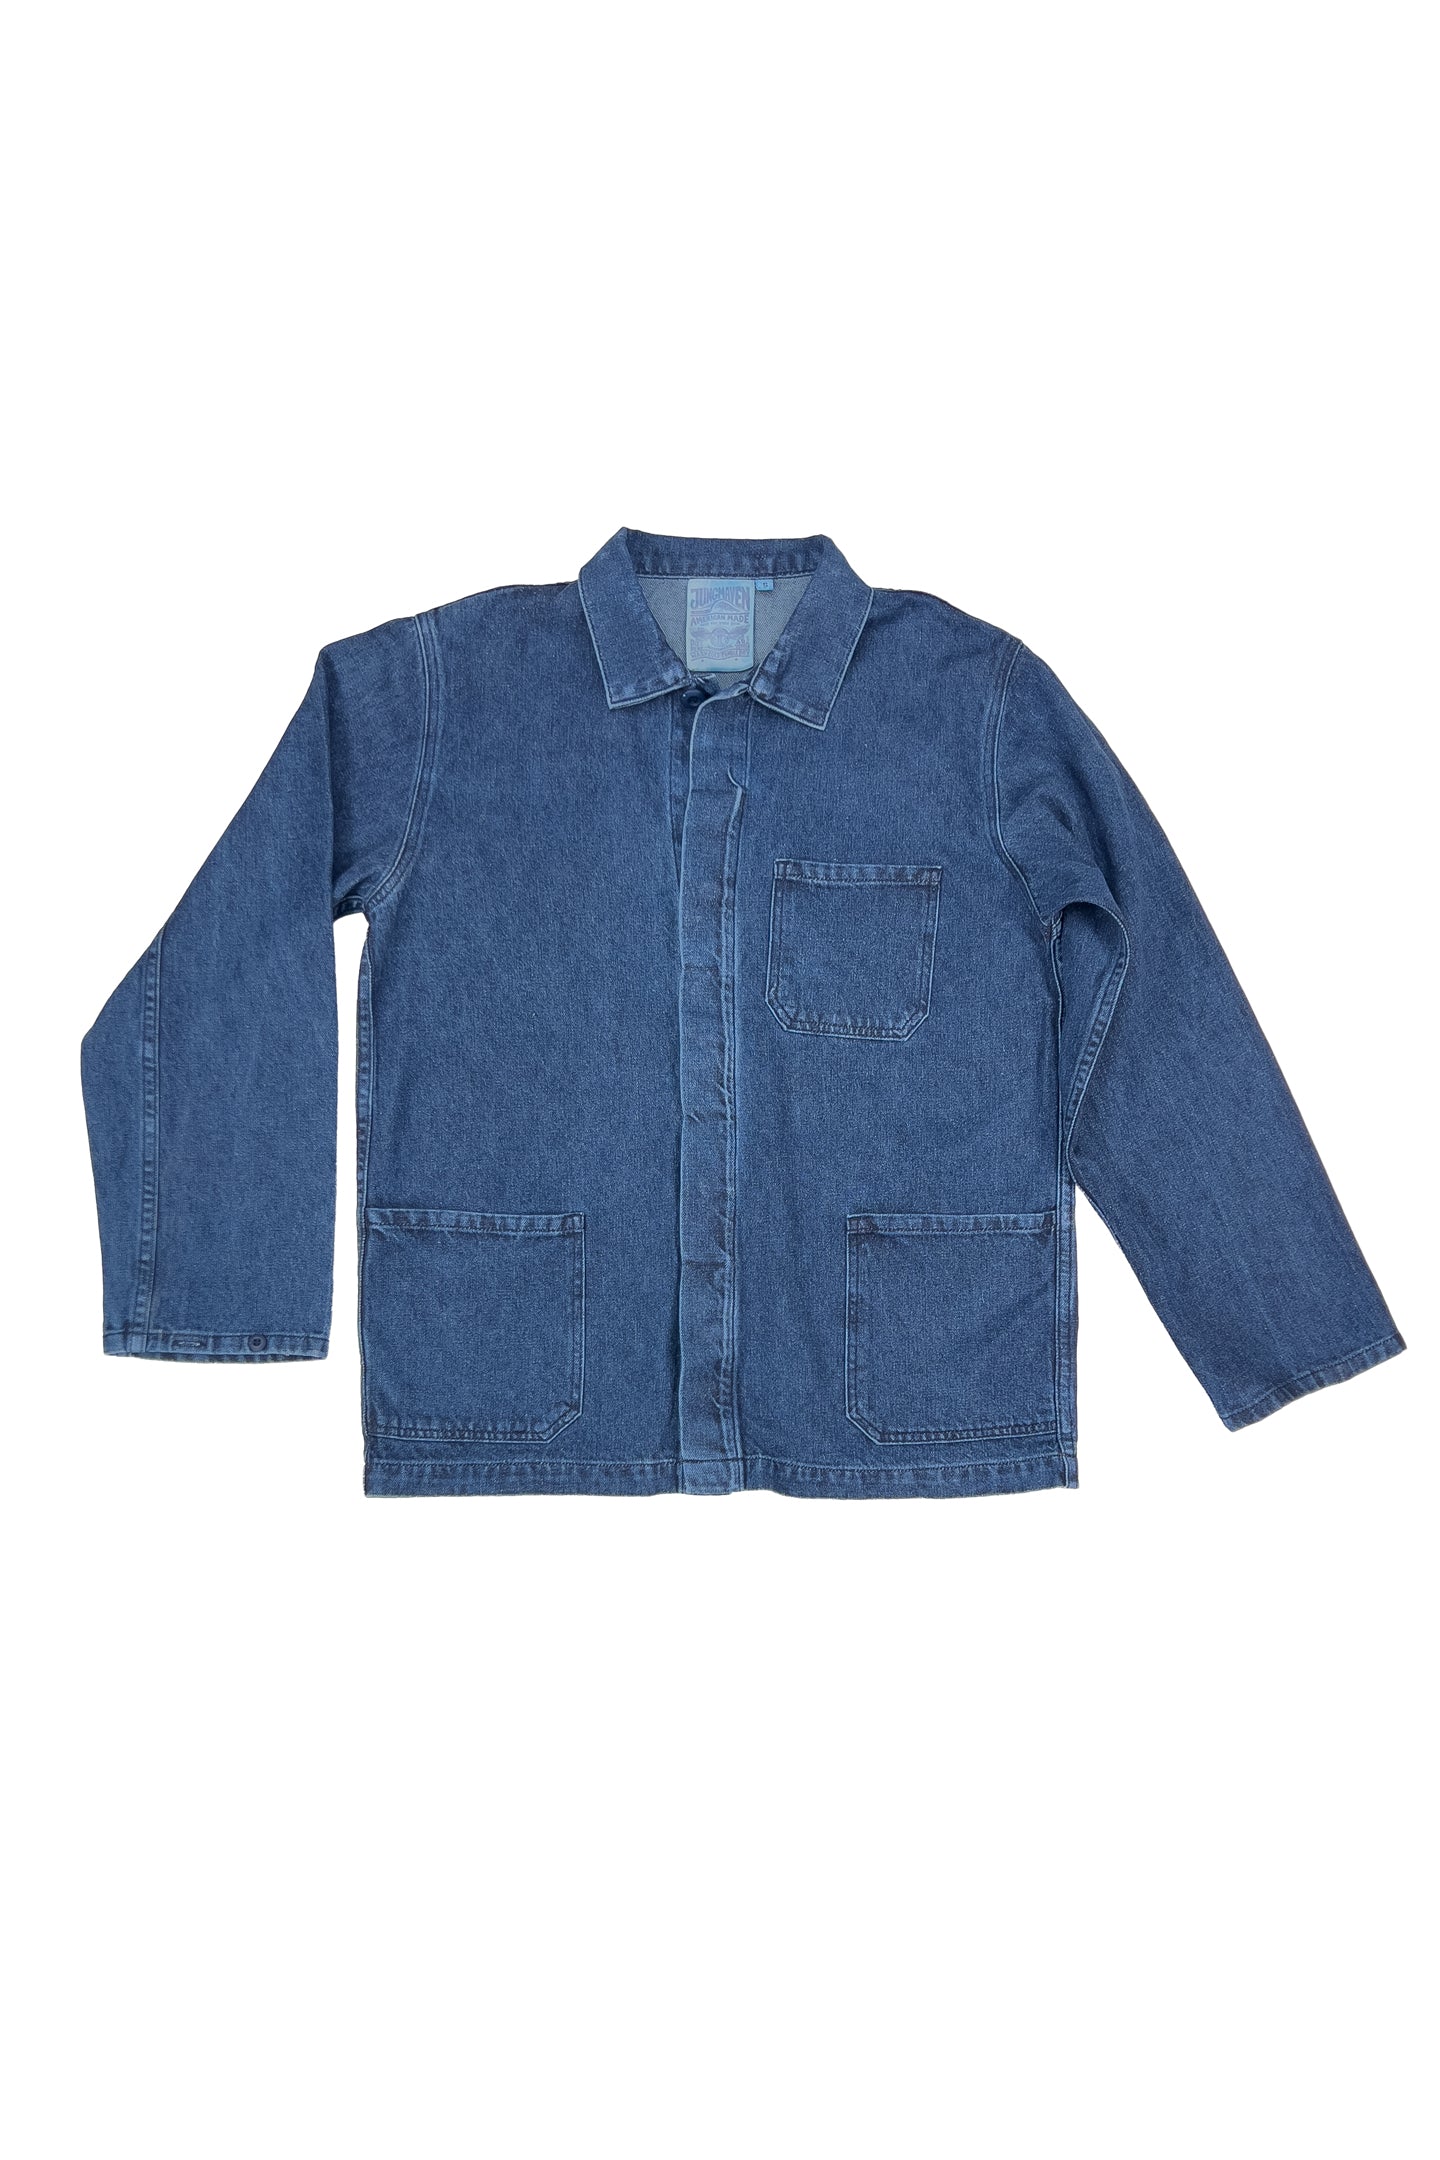 Denim Olympic Jacket | Jungmaven Hemp Clothing & Accessories / Color: Medium